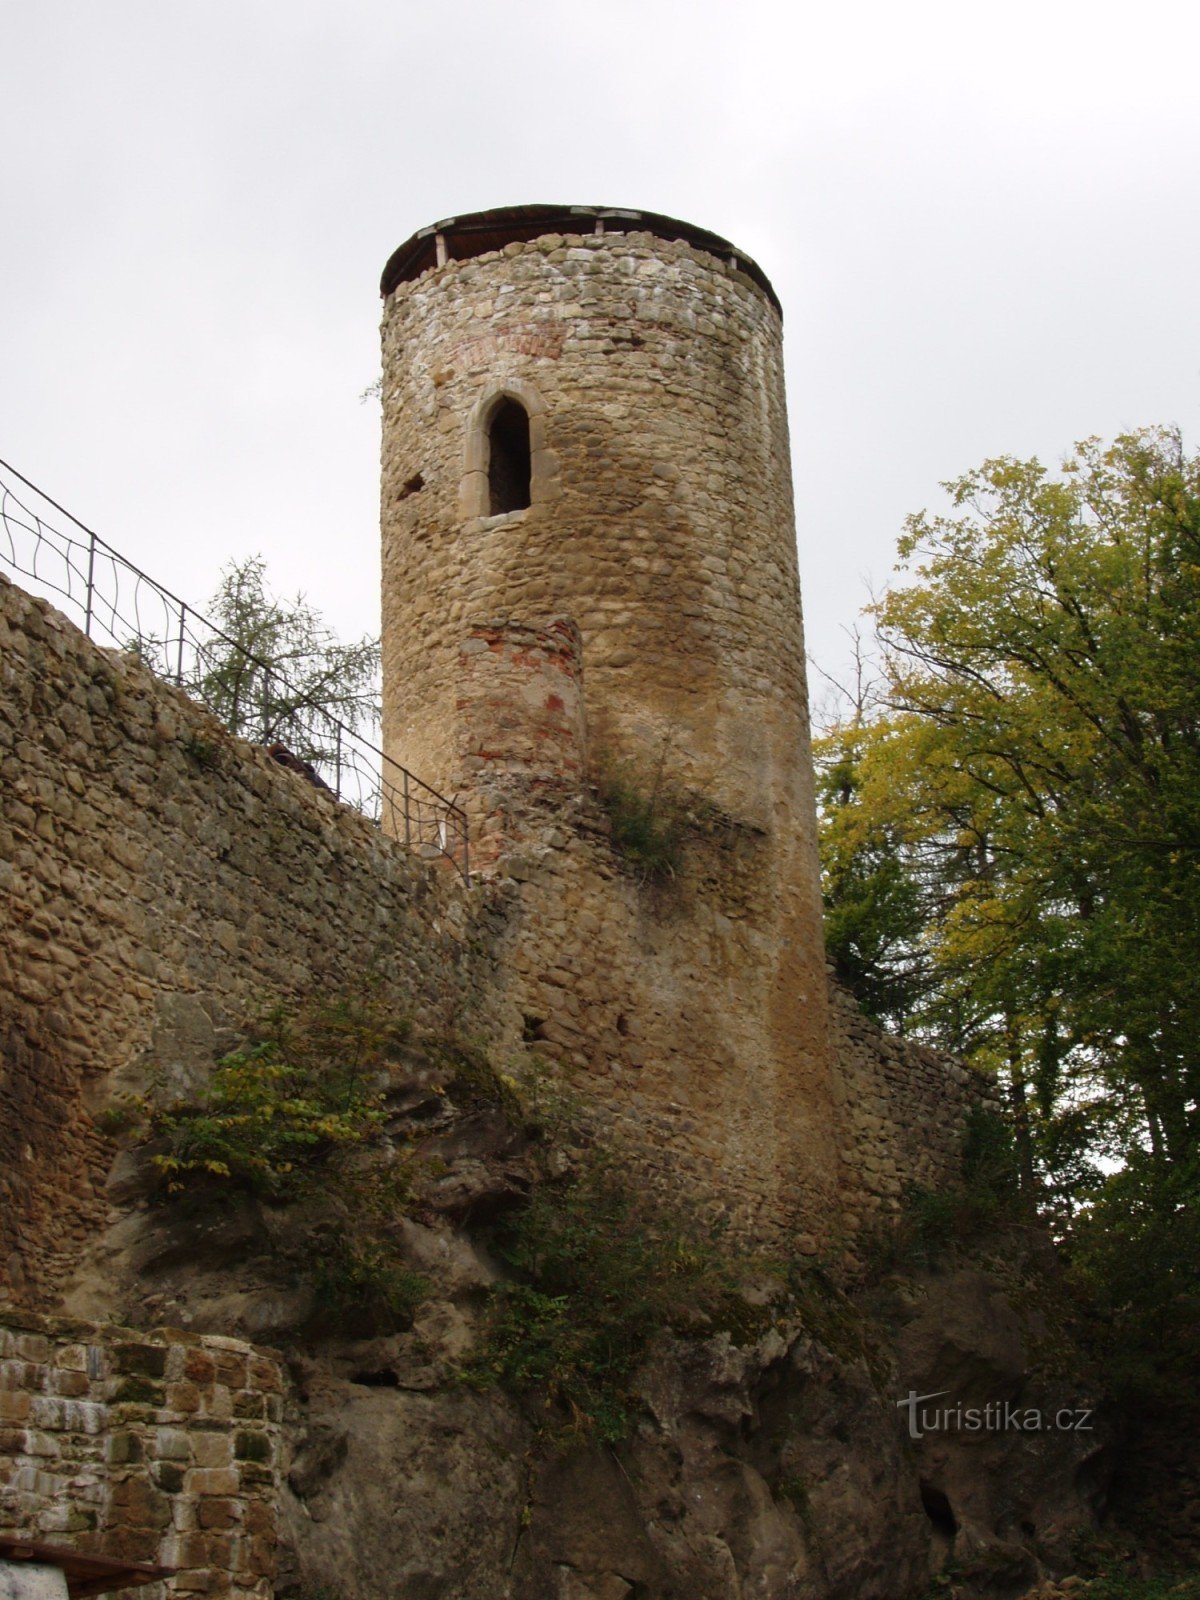 The western cylindrical tower of the Cimburk castle near Koryčany